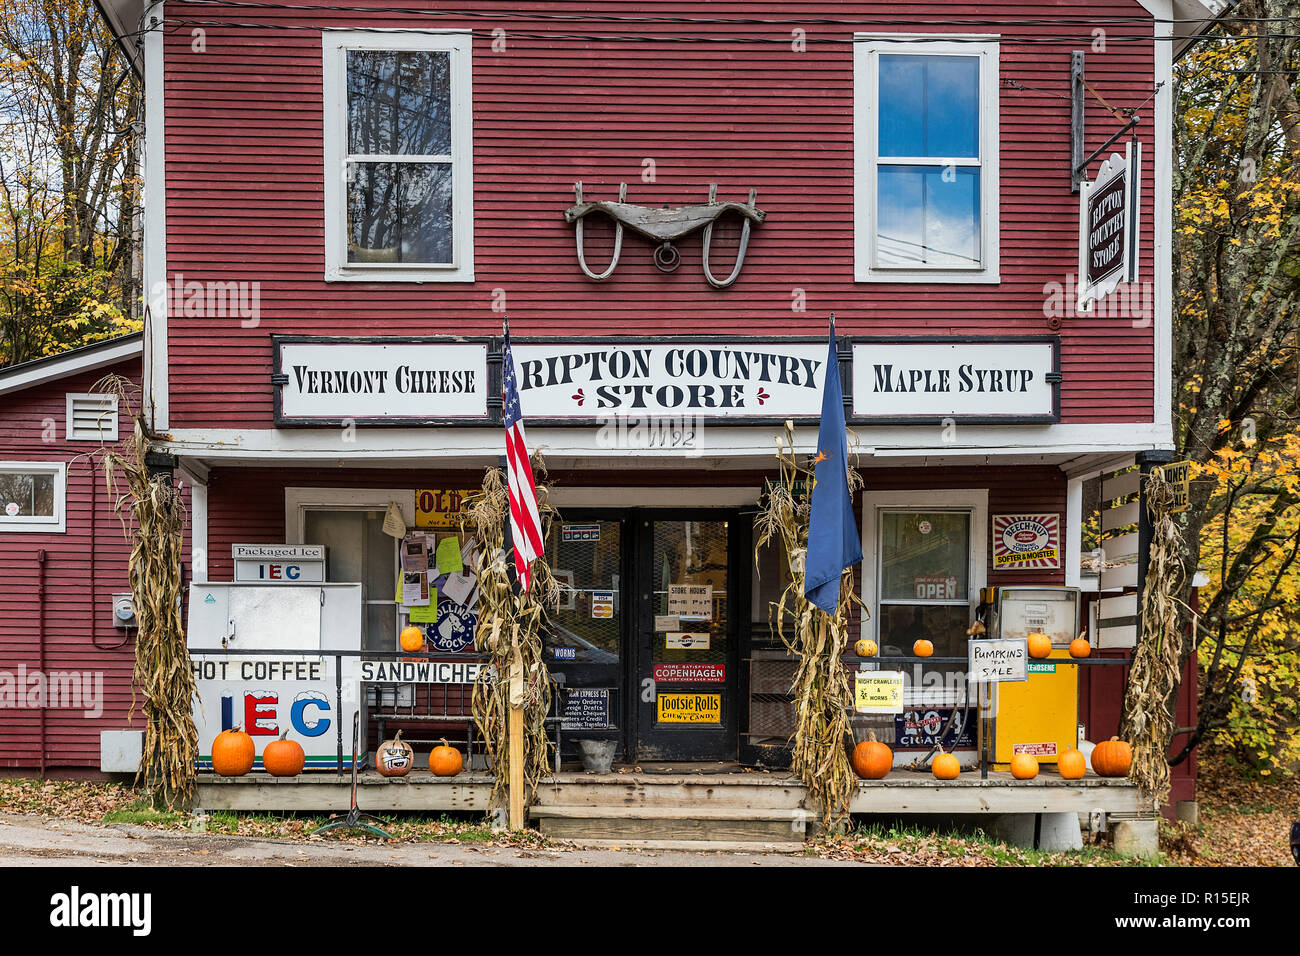 Charming Ripton Country Store, Vermont, USA. Stock Photo